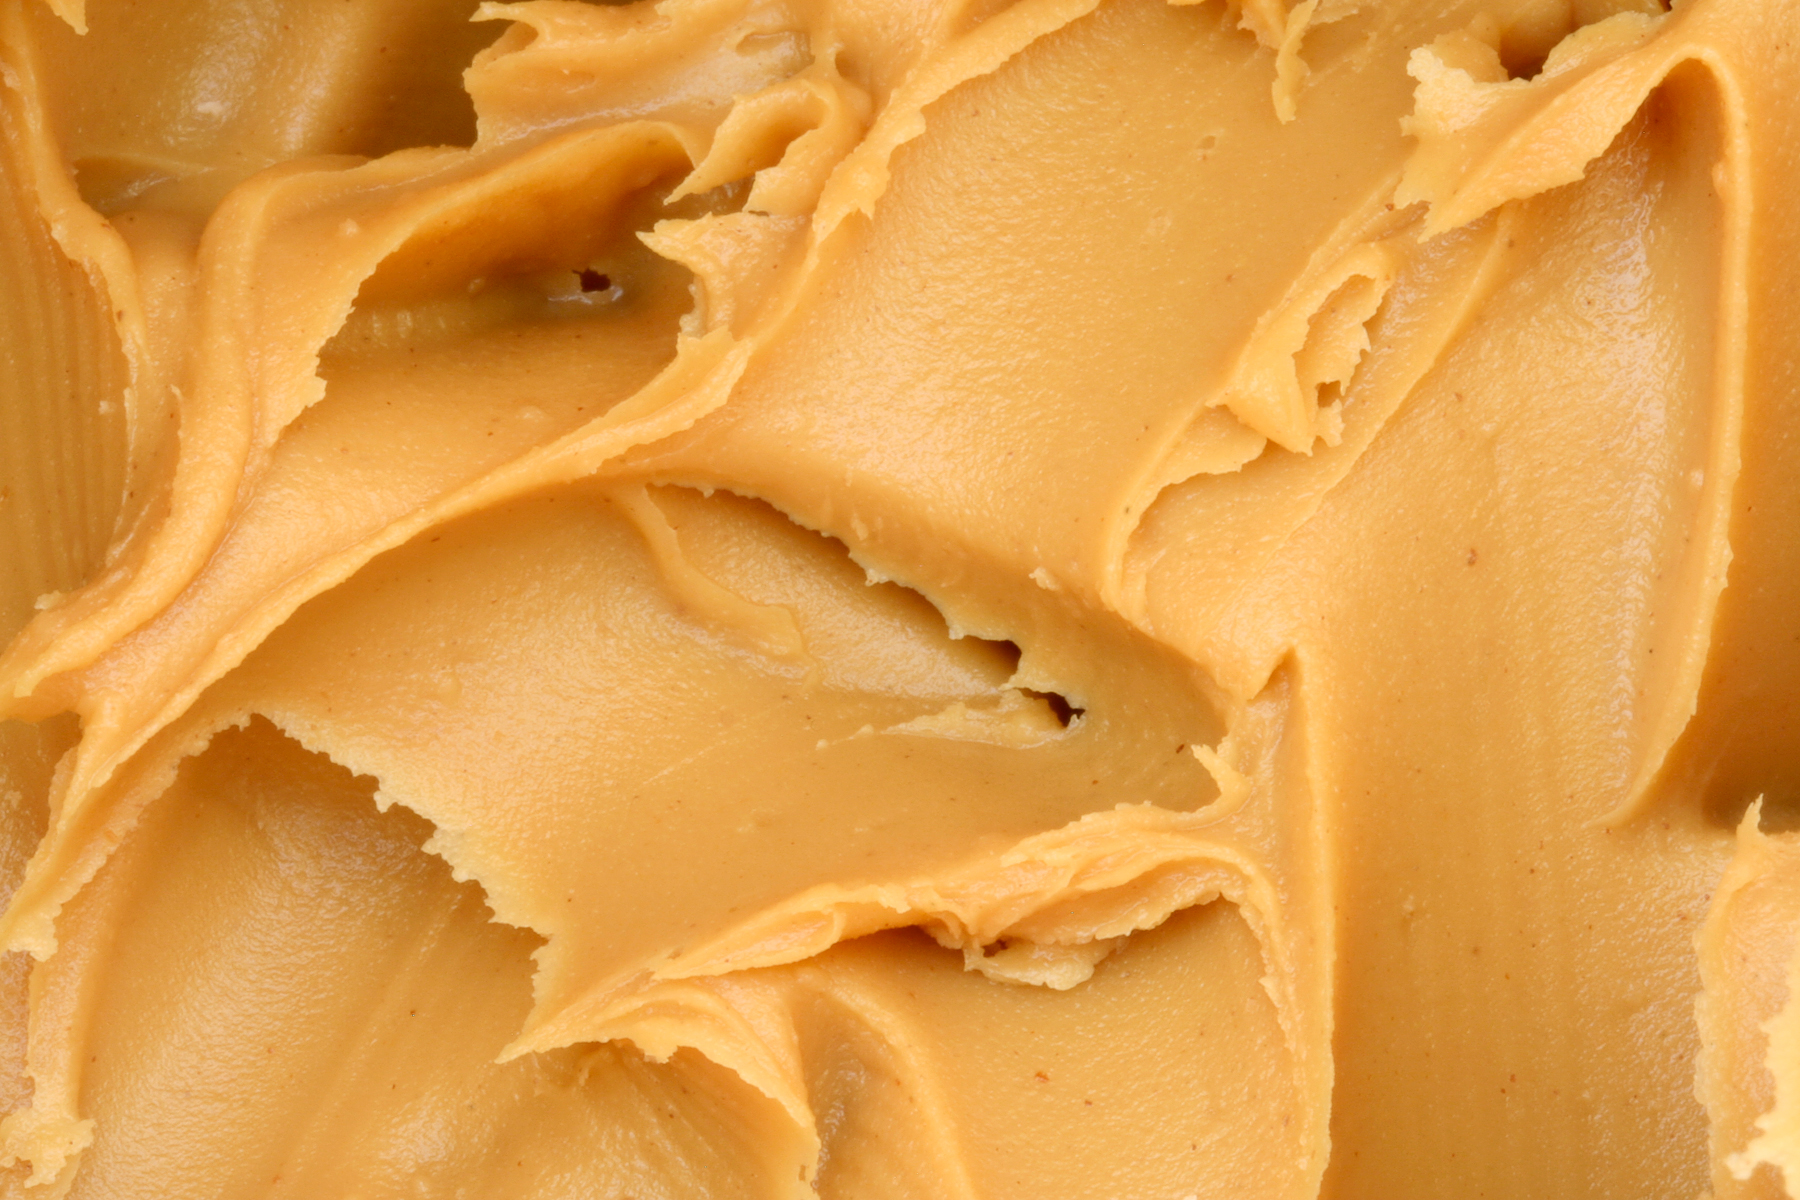 Peanut butter texture photo